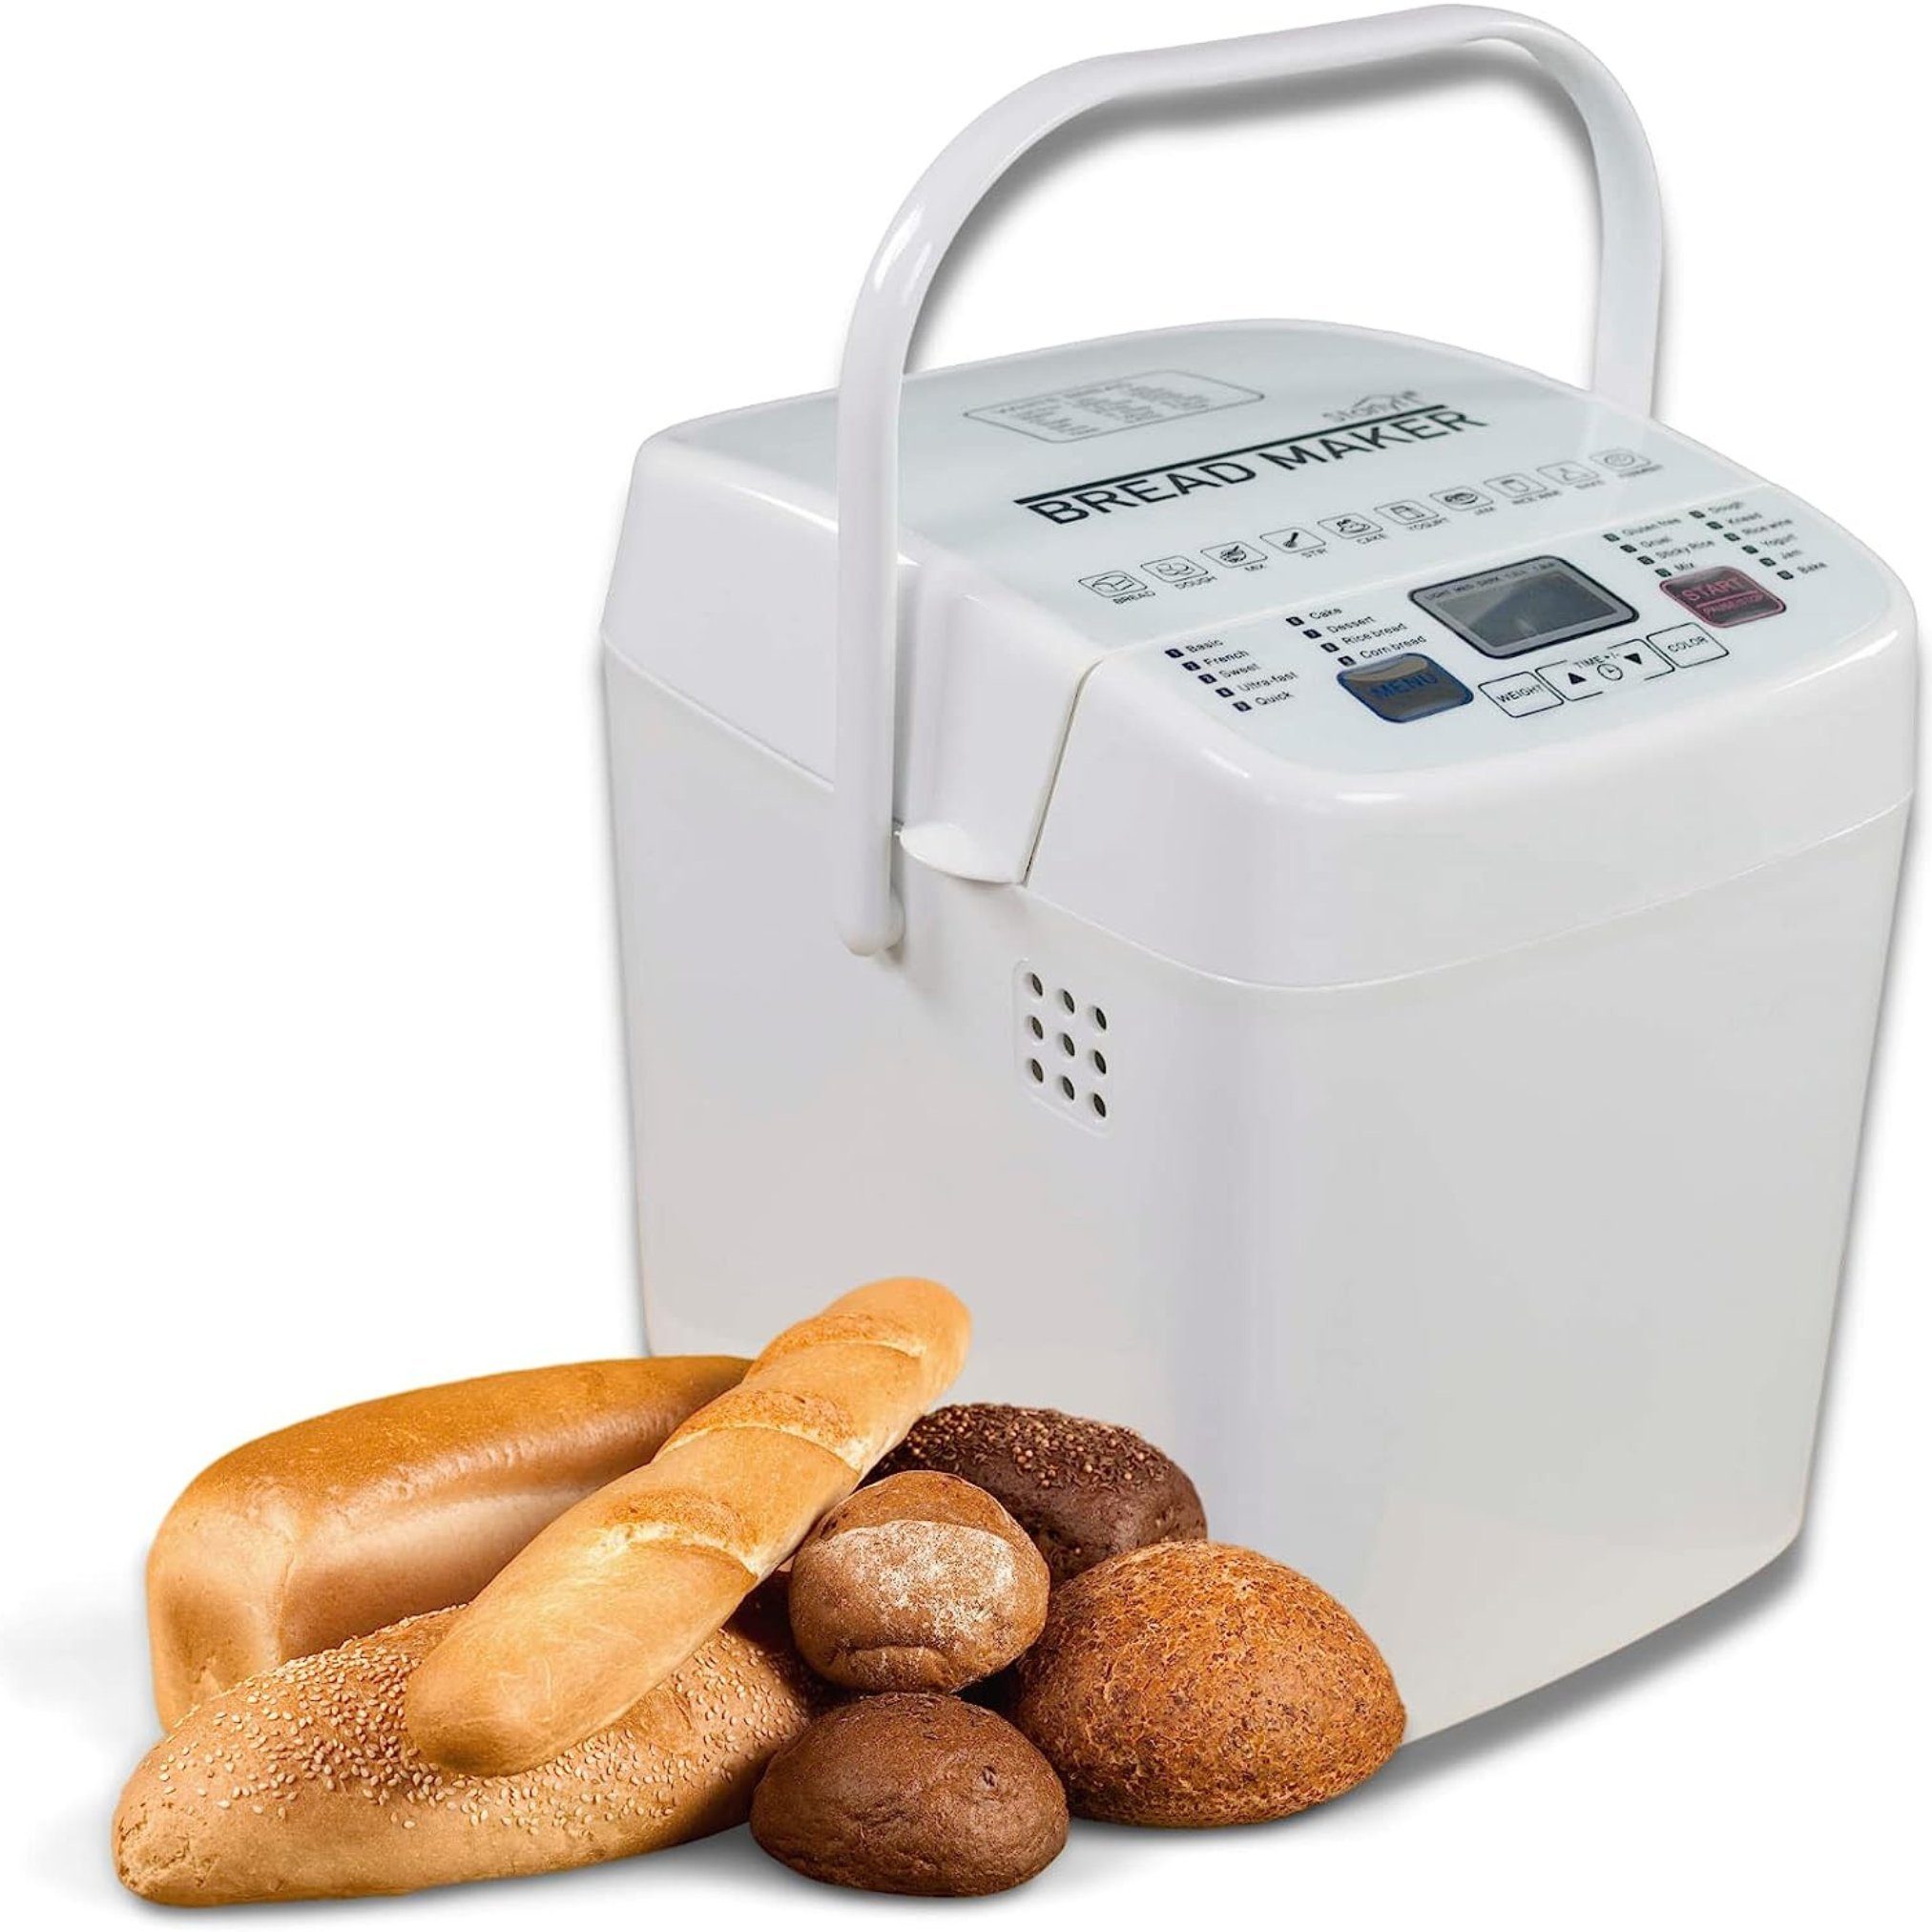 Bread - Marmelade, für 14 Maker, Programme, 750g Timer, Joghurt, Starlyf Brot, Brotbackautomat Funktion 500,00 W, Warmhalte